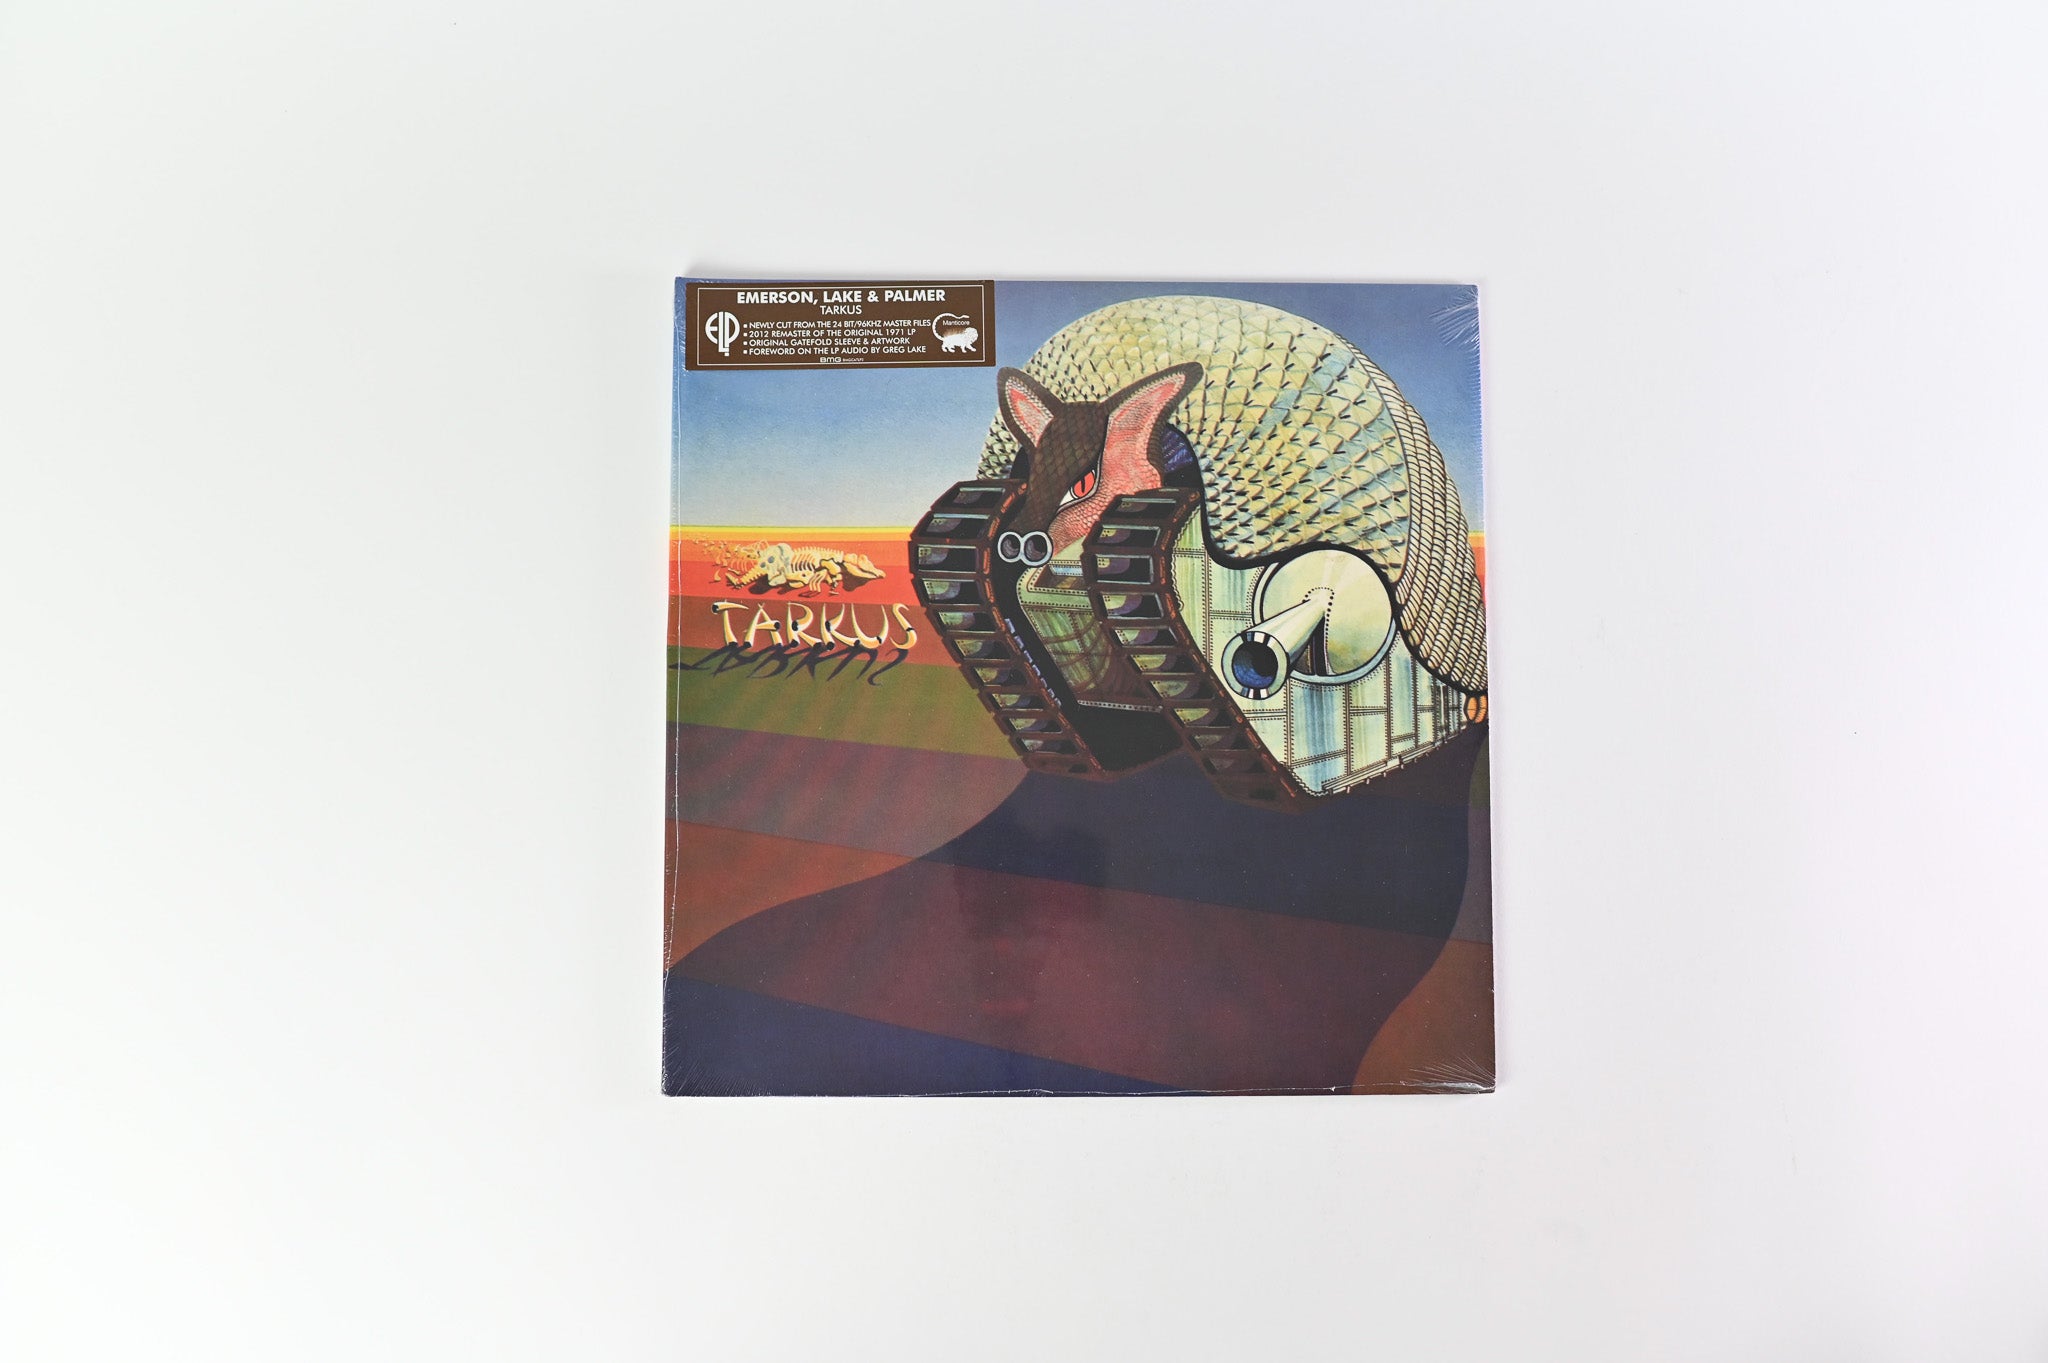 Emerson, Lake & Palmer - Tarkus on BMG - Sealed